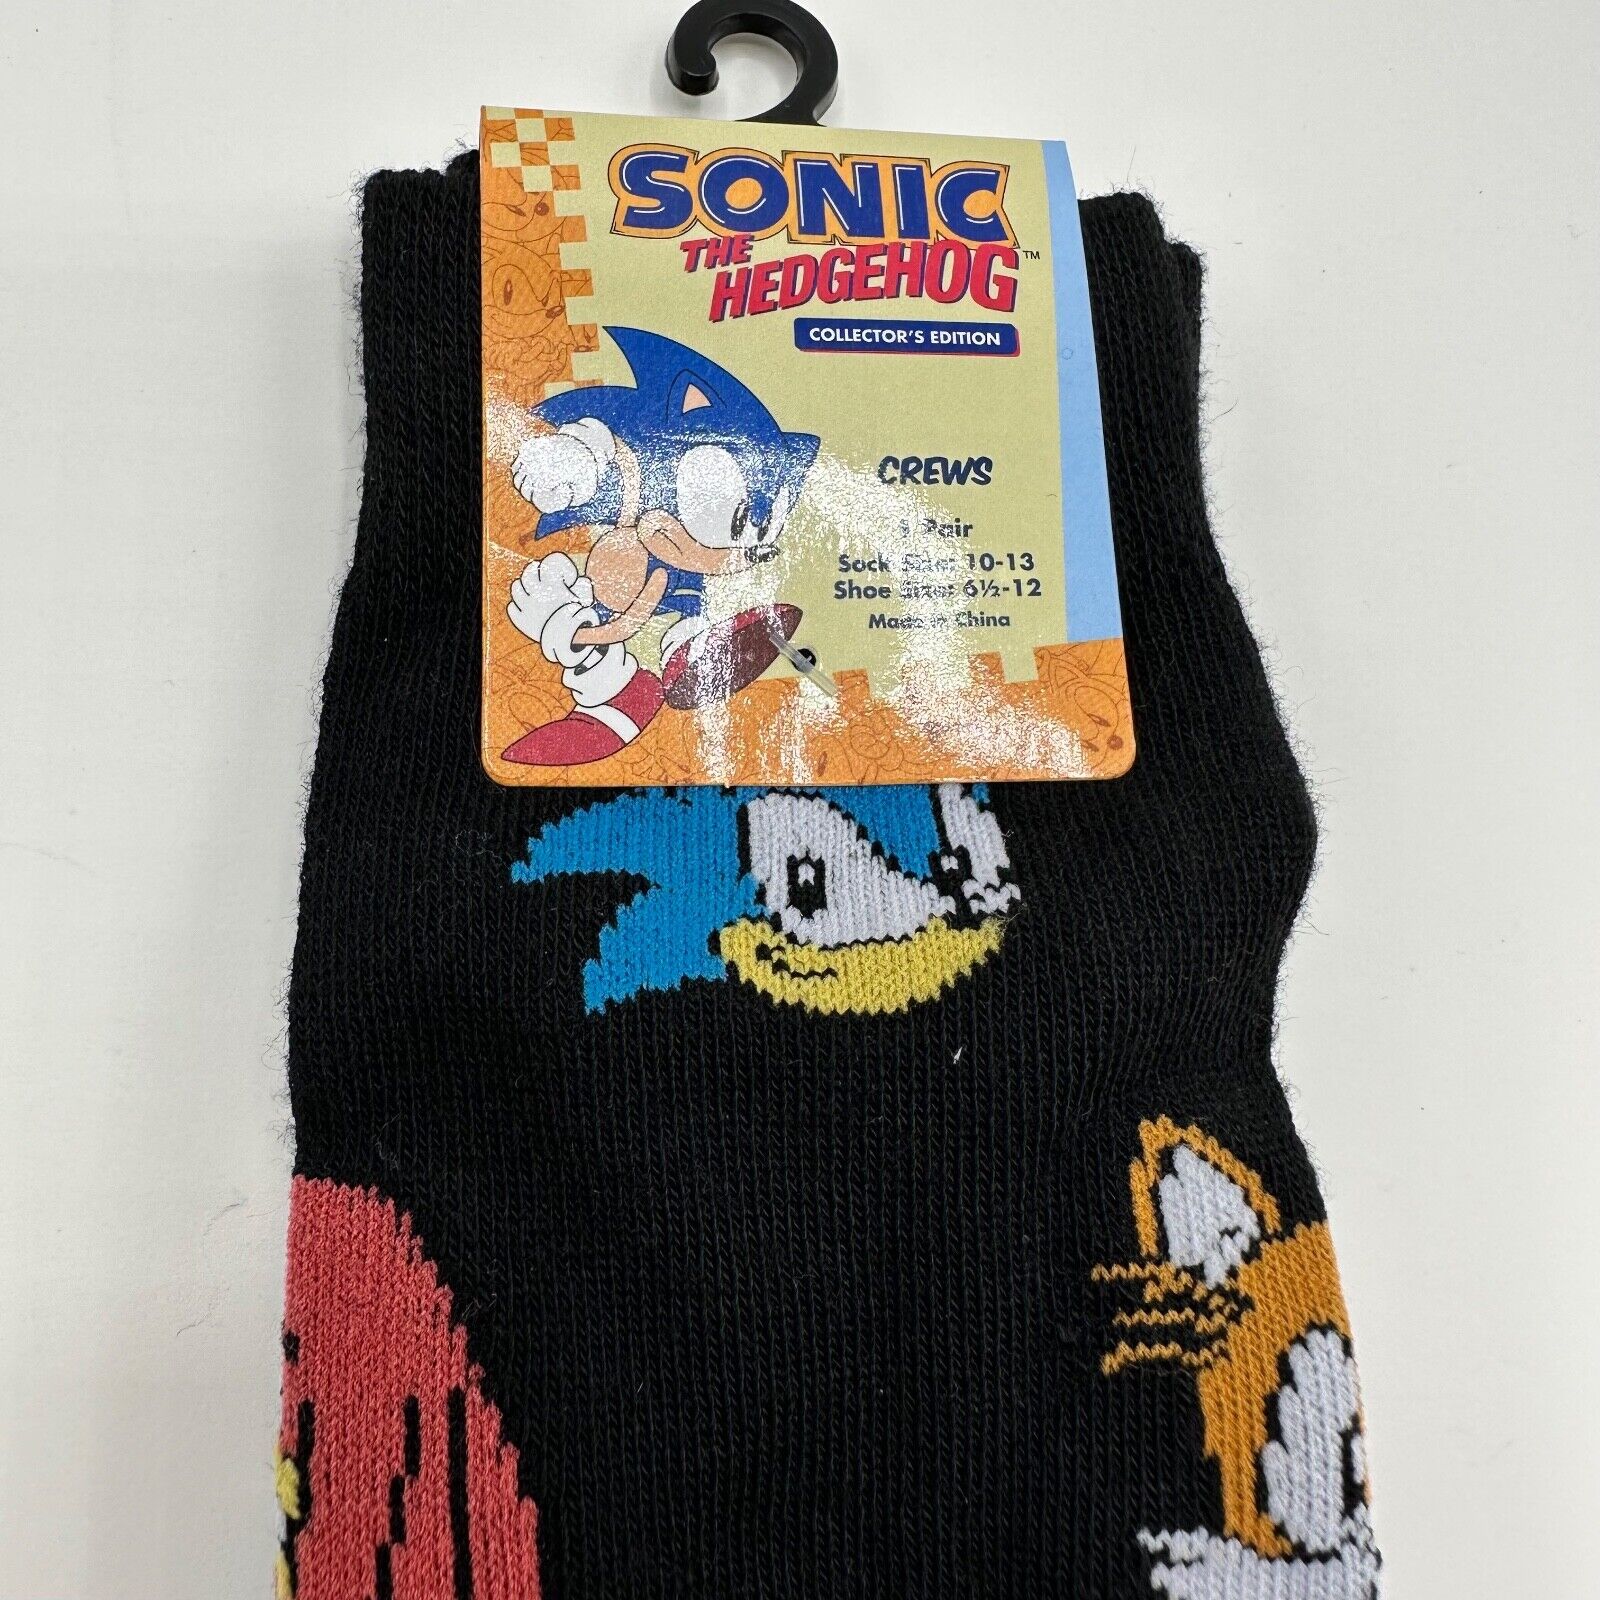 Sonic The Hedgehog Crew Men's Size 10-13 Socks No Brand - фотография #2